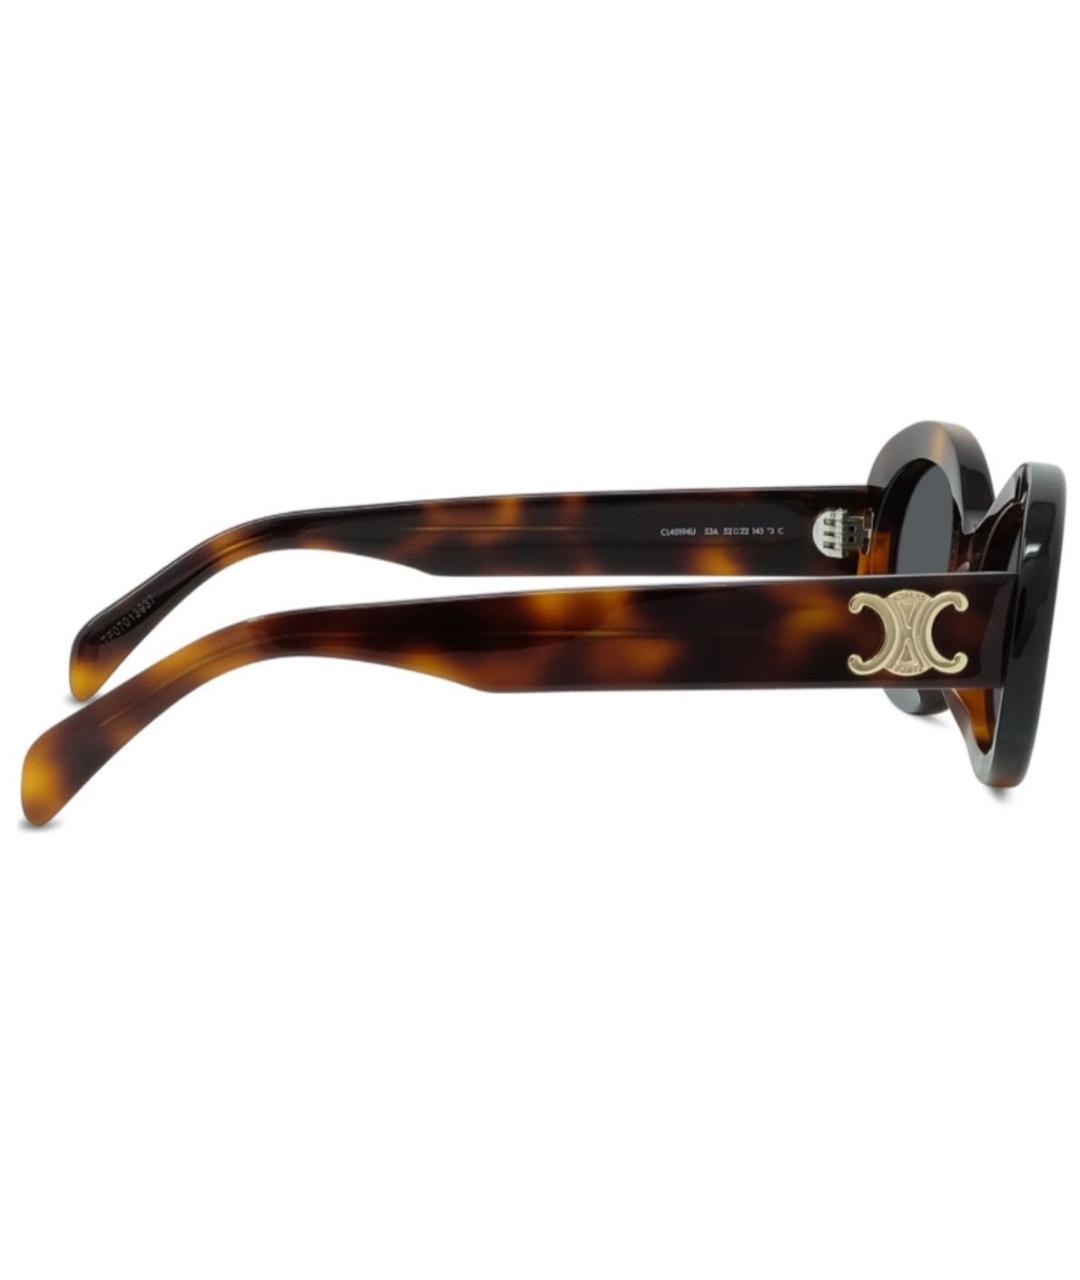 CELINE PRE-OWNED Коричневые пластиковые солнцезащитные очки, фото 3